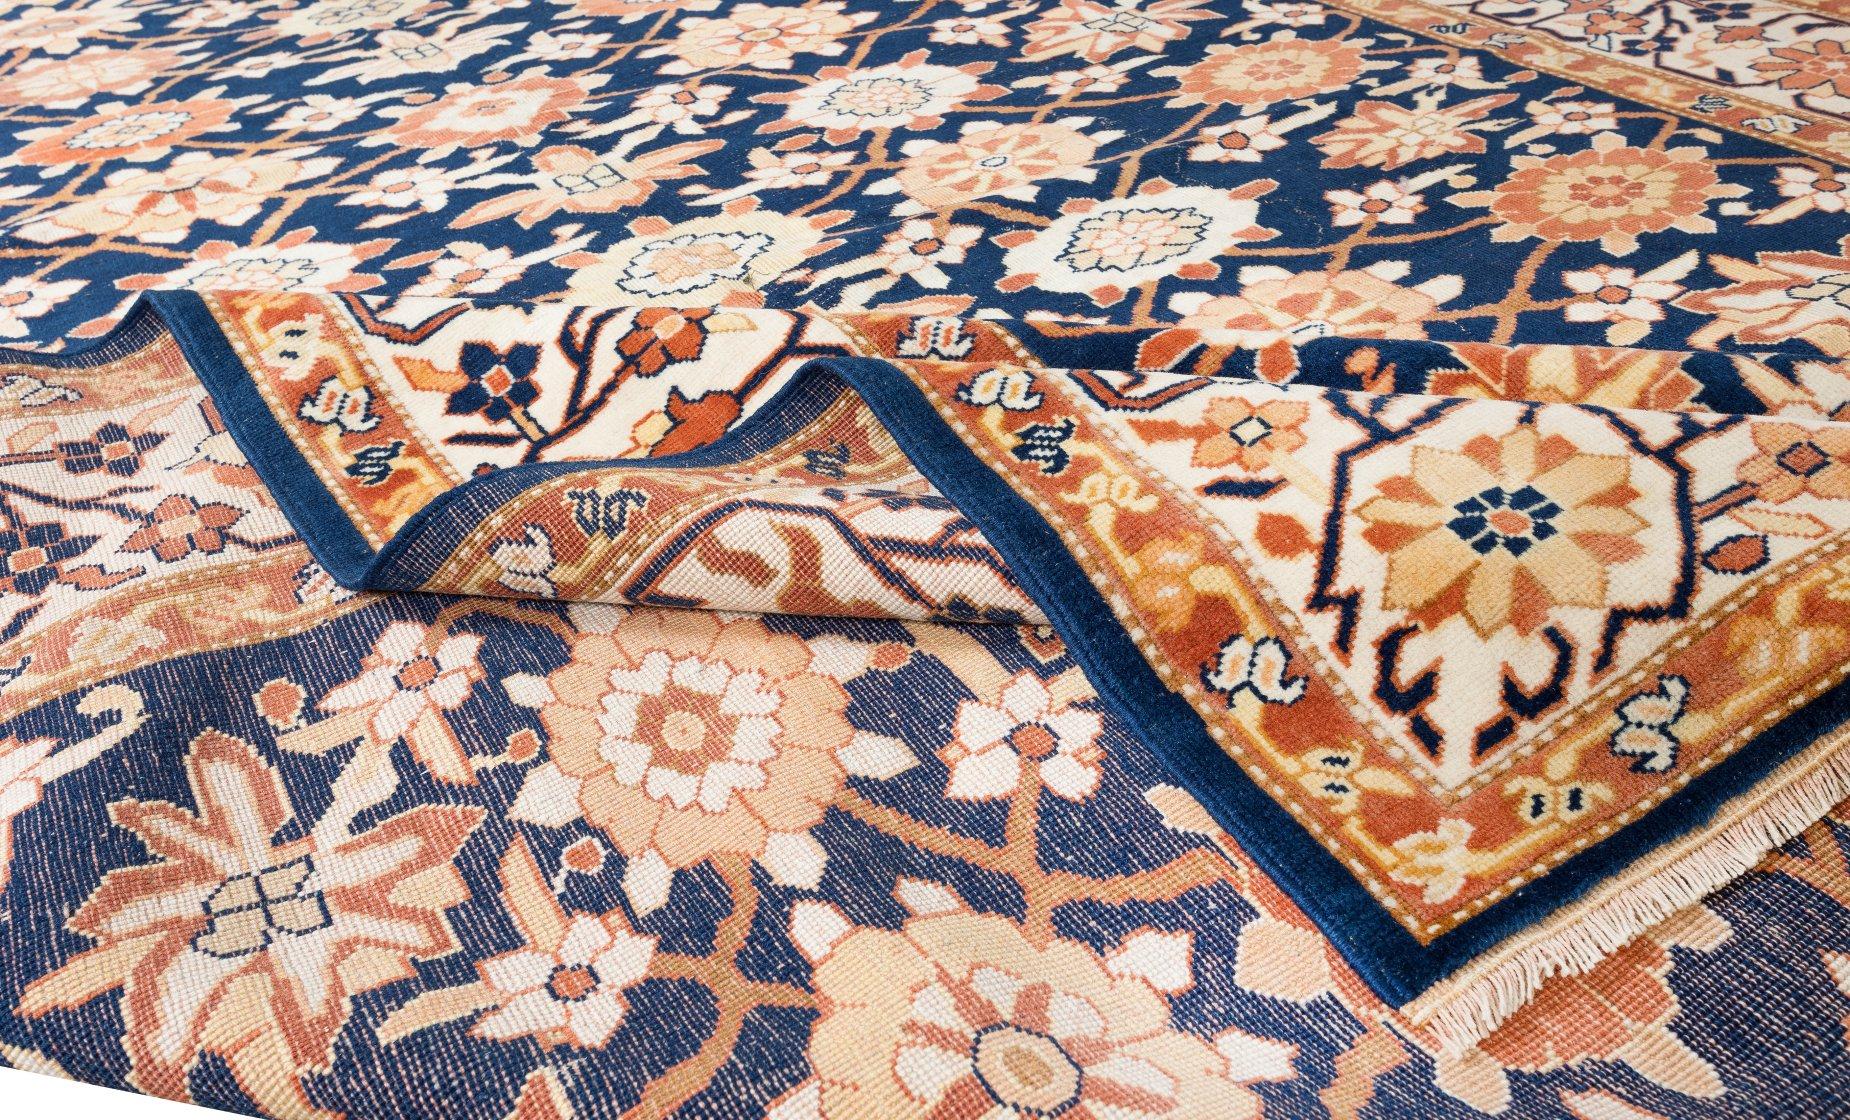 1960s carpet patterns